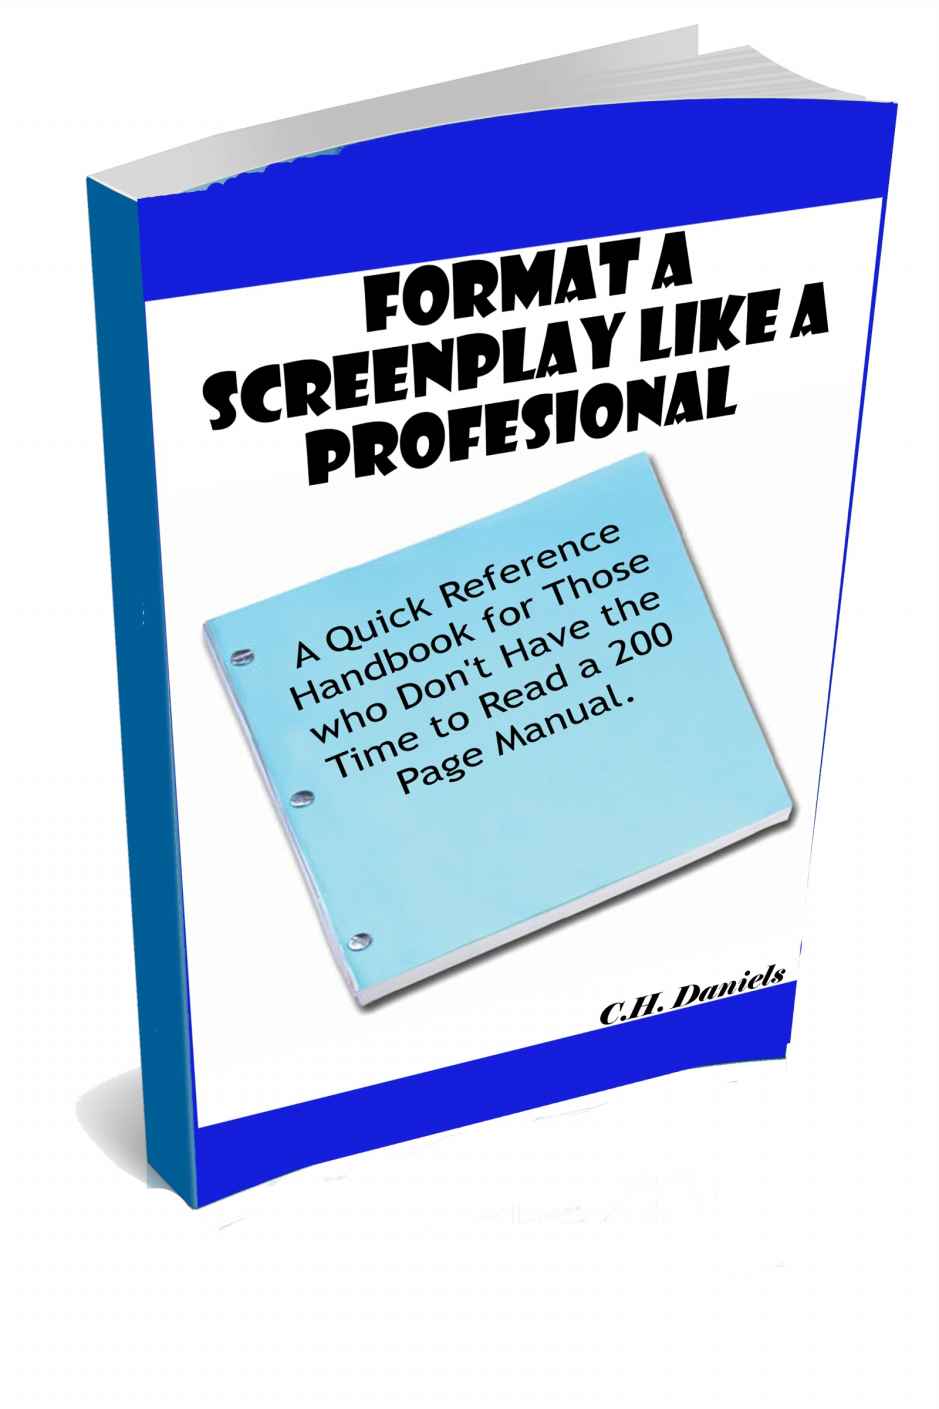 FREE: Format a Screenplay Like a Professional by C.H. Daniels